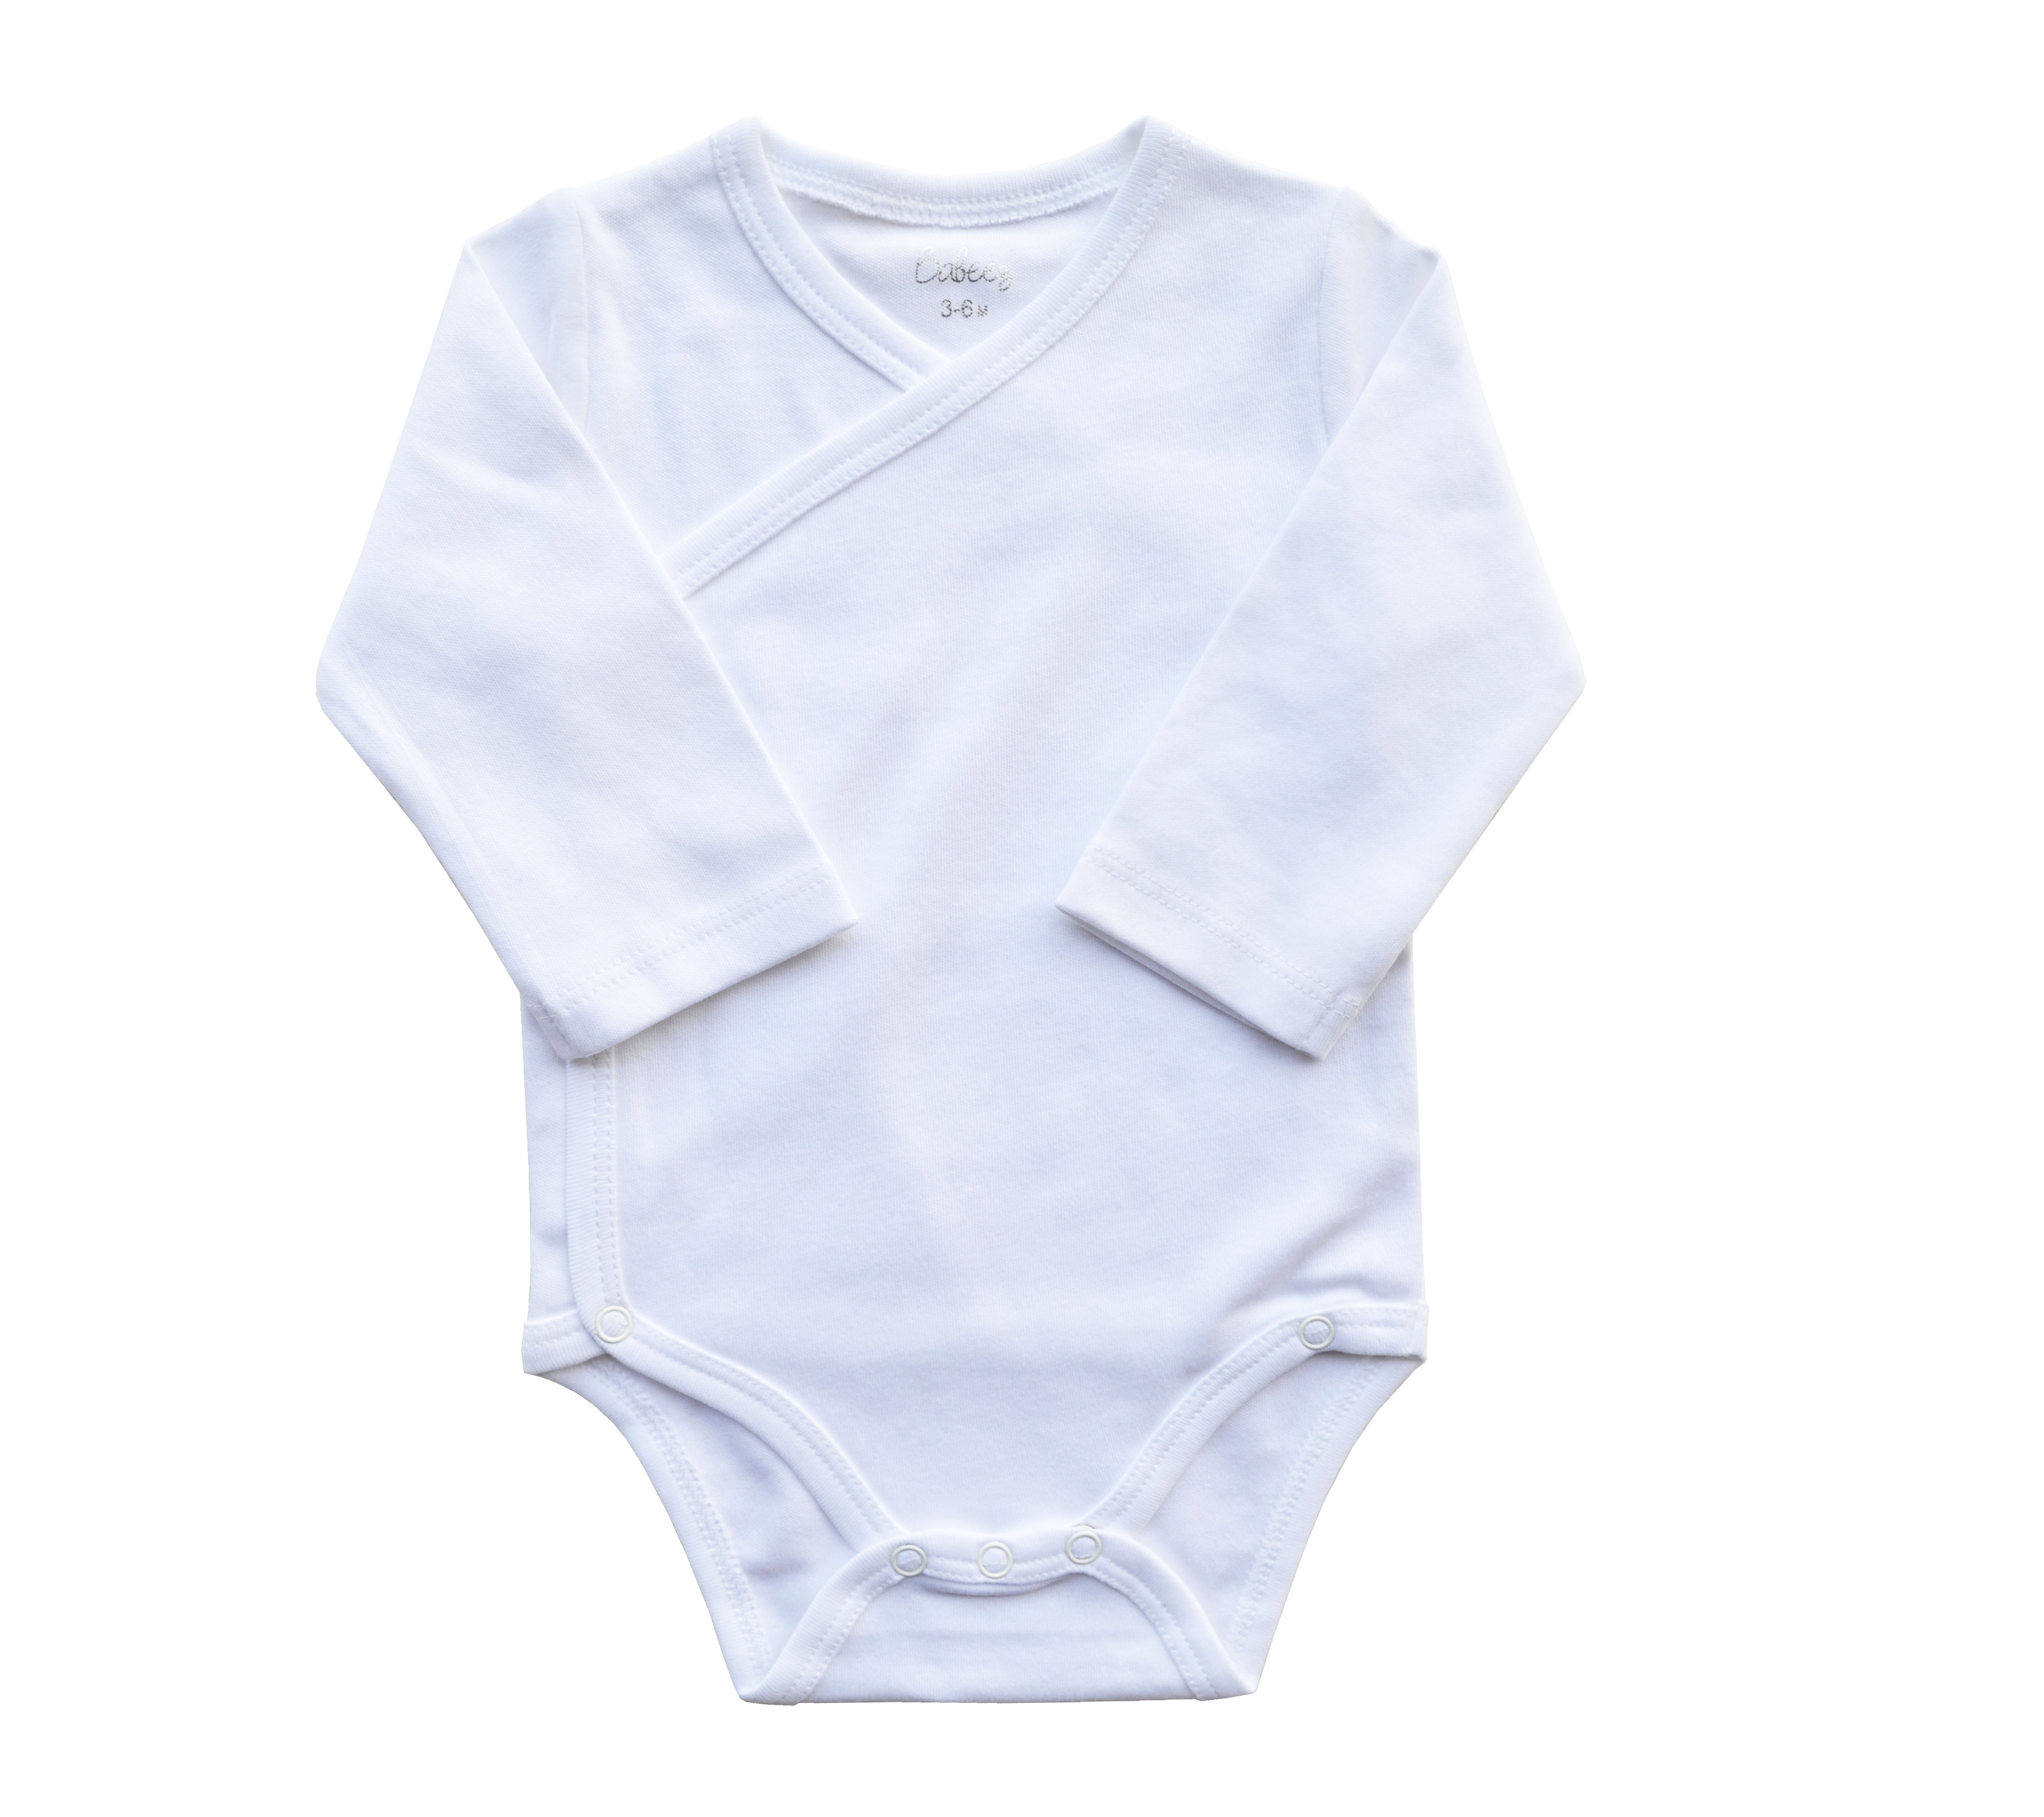 White Baby Body with Long Sleeves (100% Cotton Interlock Biowash)